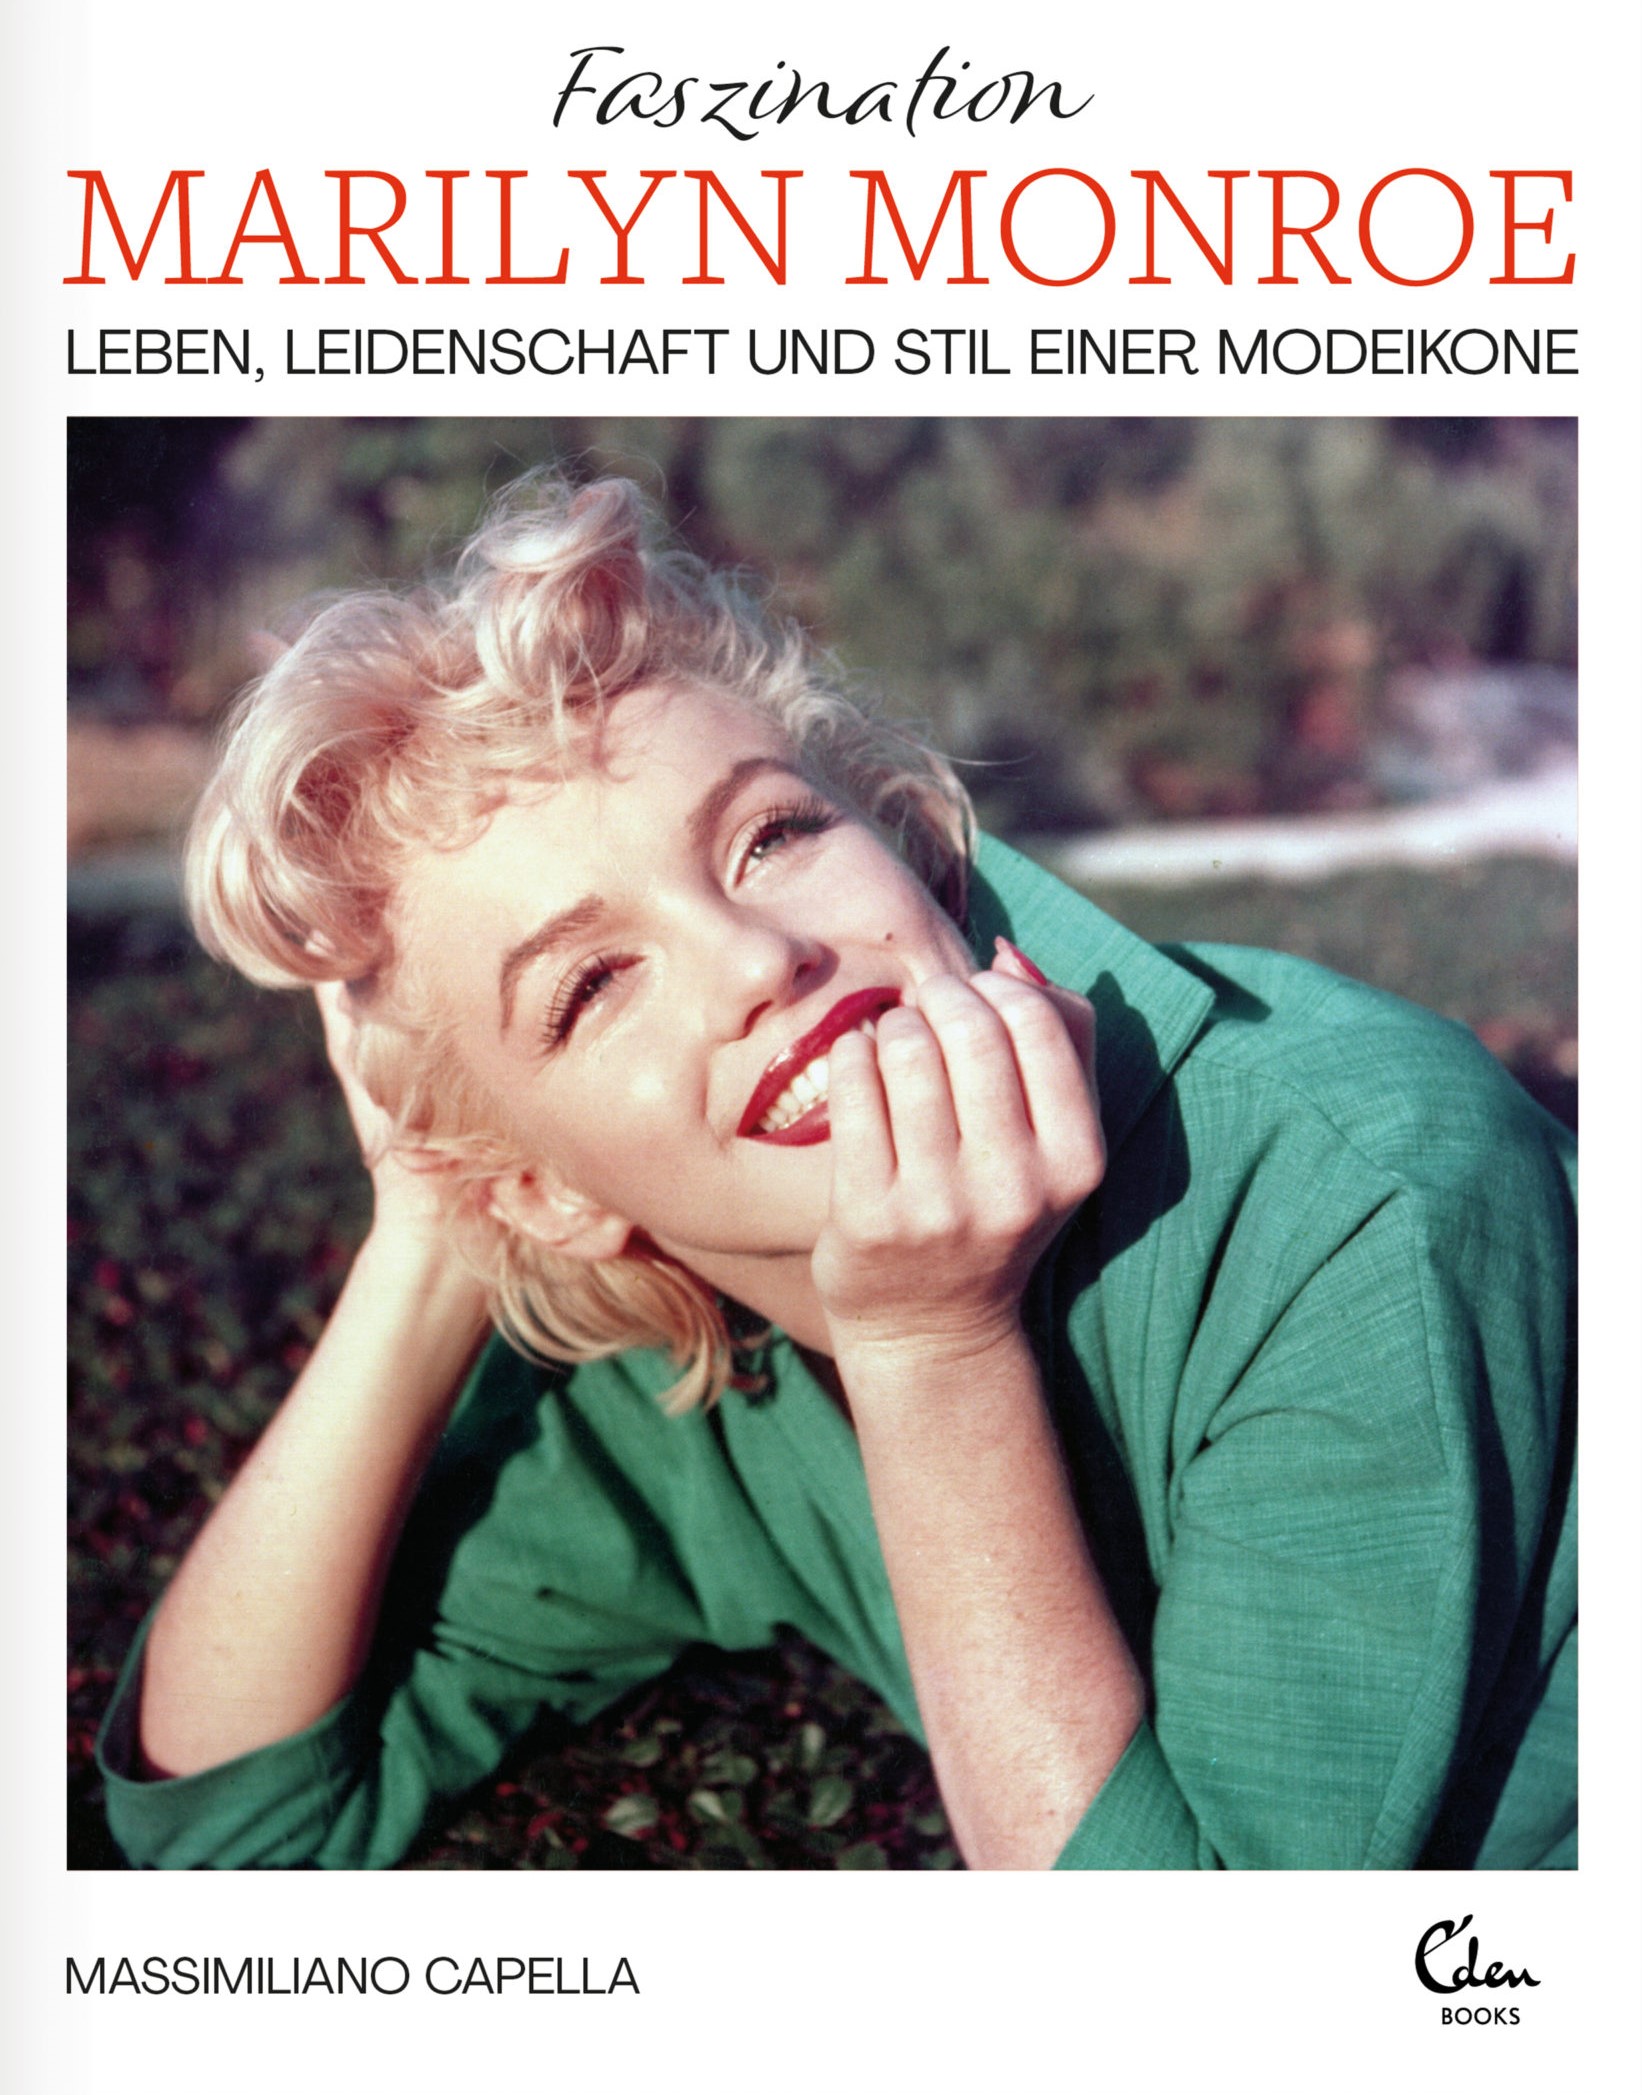 Buchcover: Massimiliano Capella: Faszination Marilyn Monroe